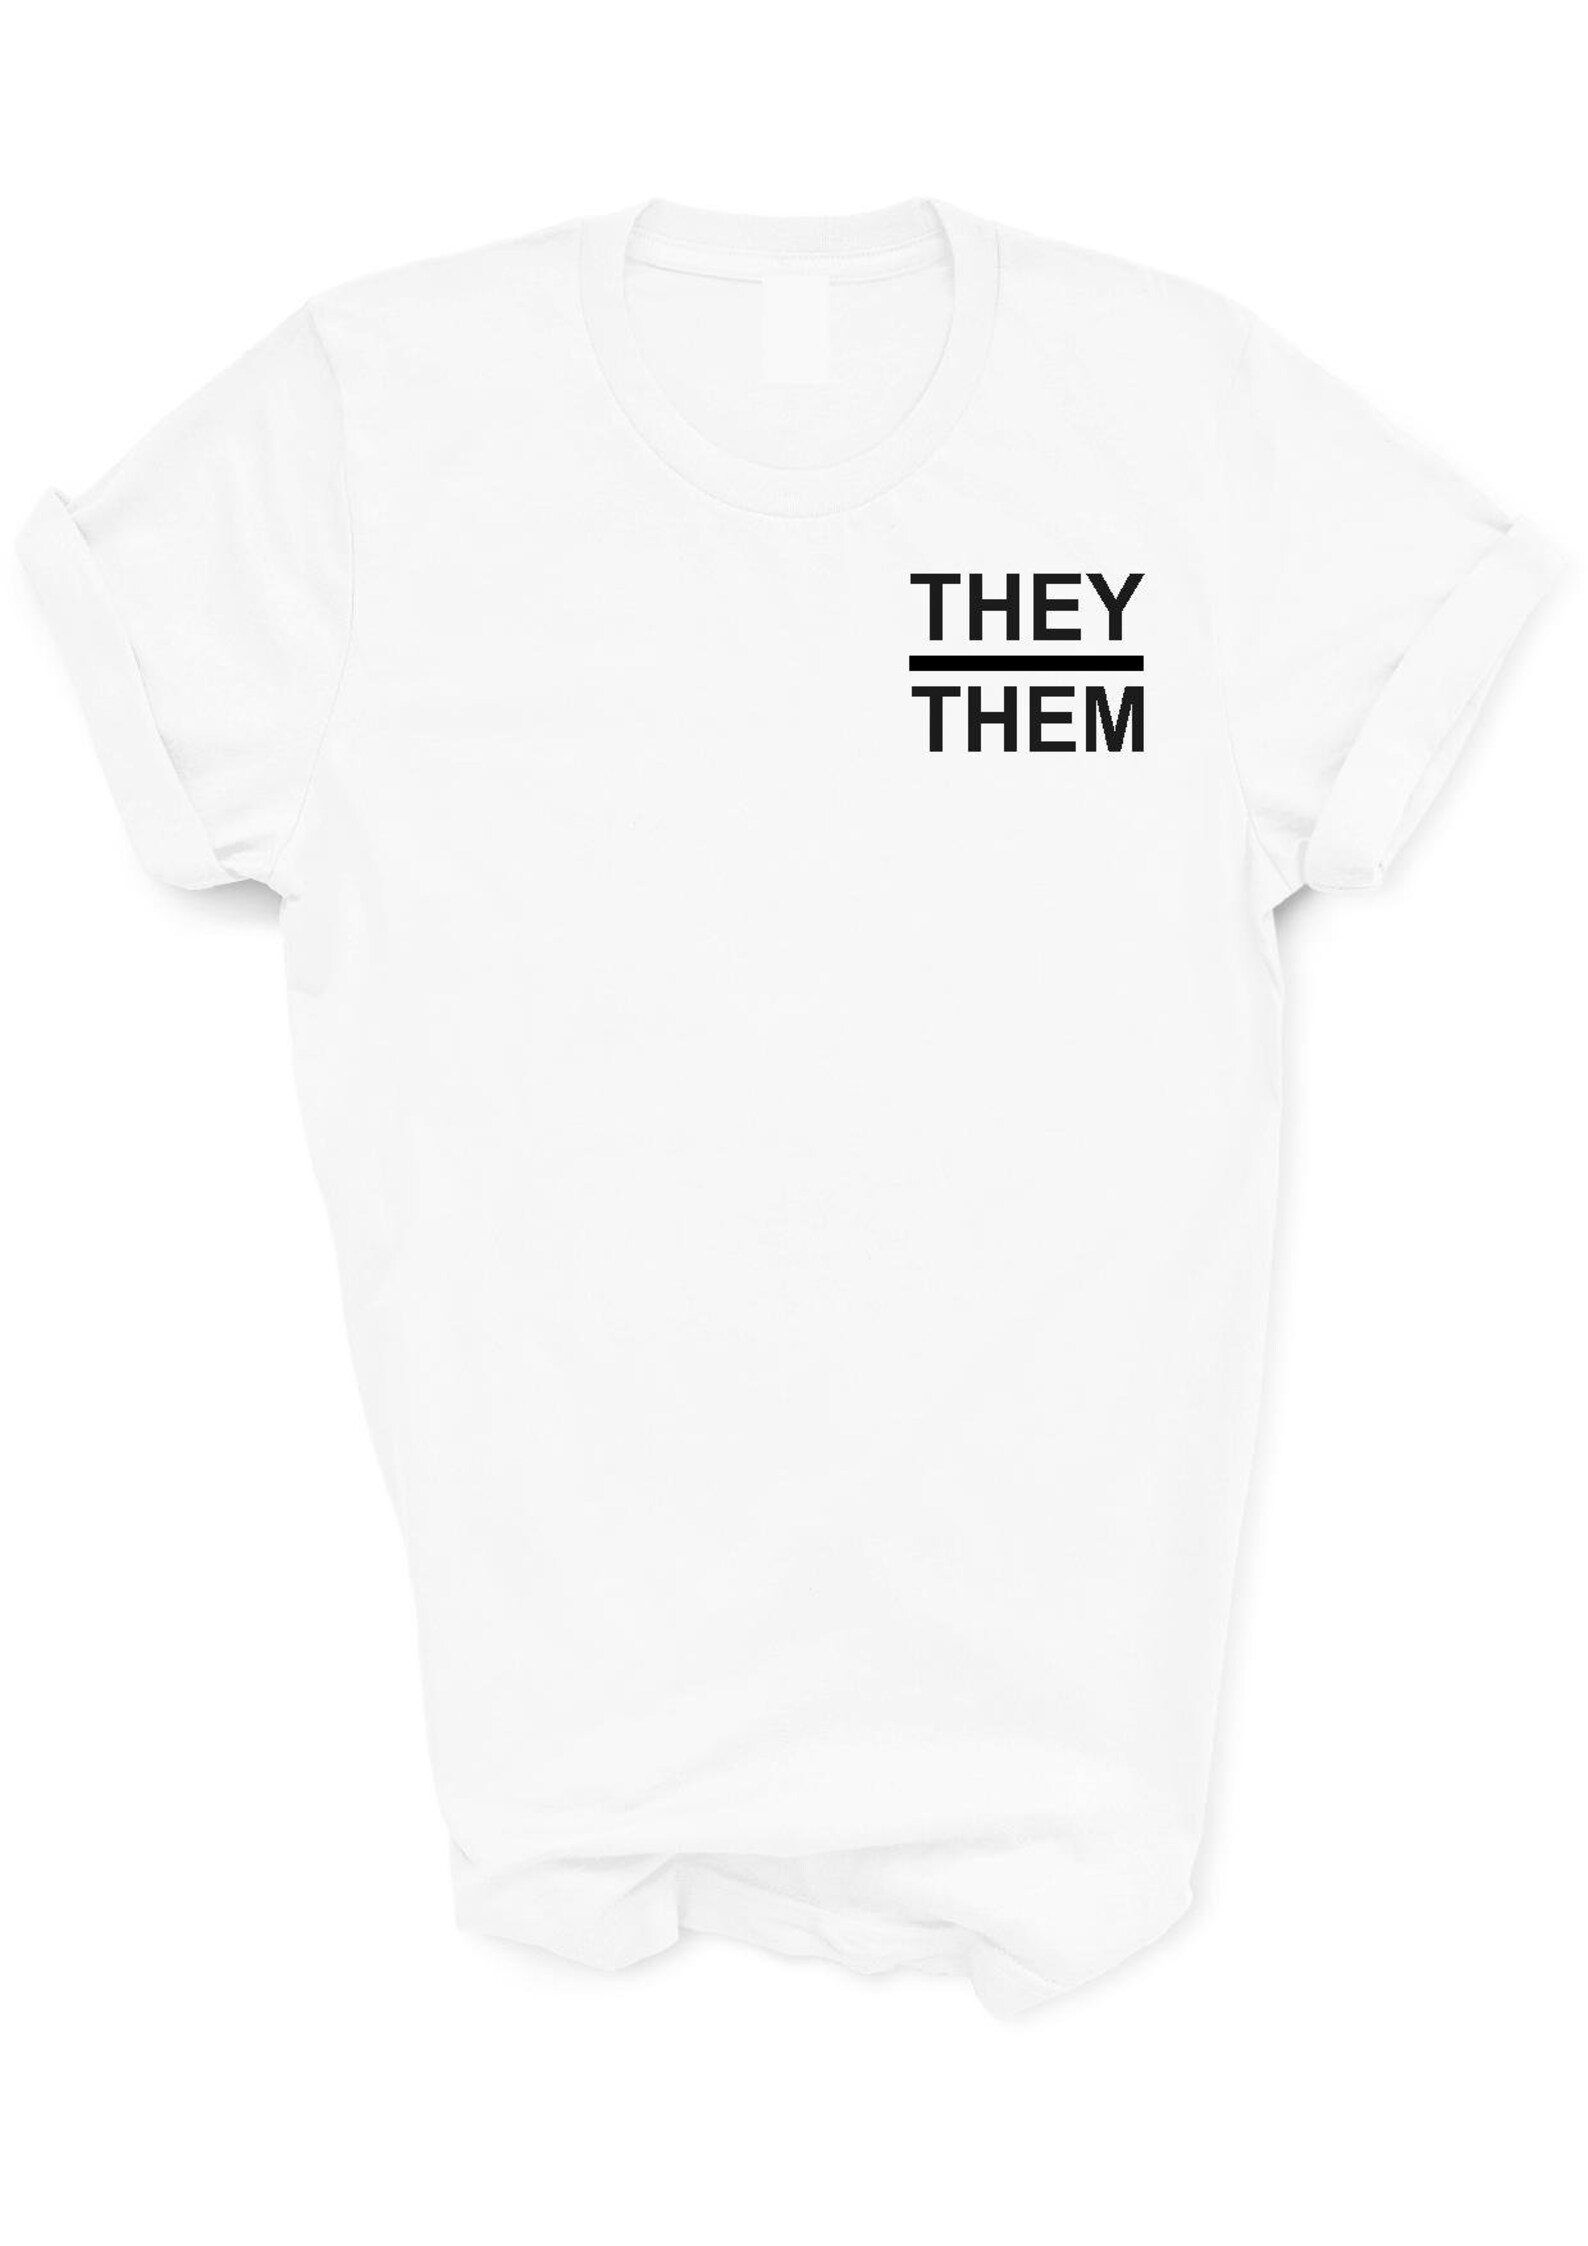 They Them T-shirt Pronouns Gender Identity Shirts for - Etsy UK